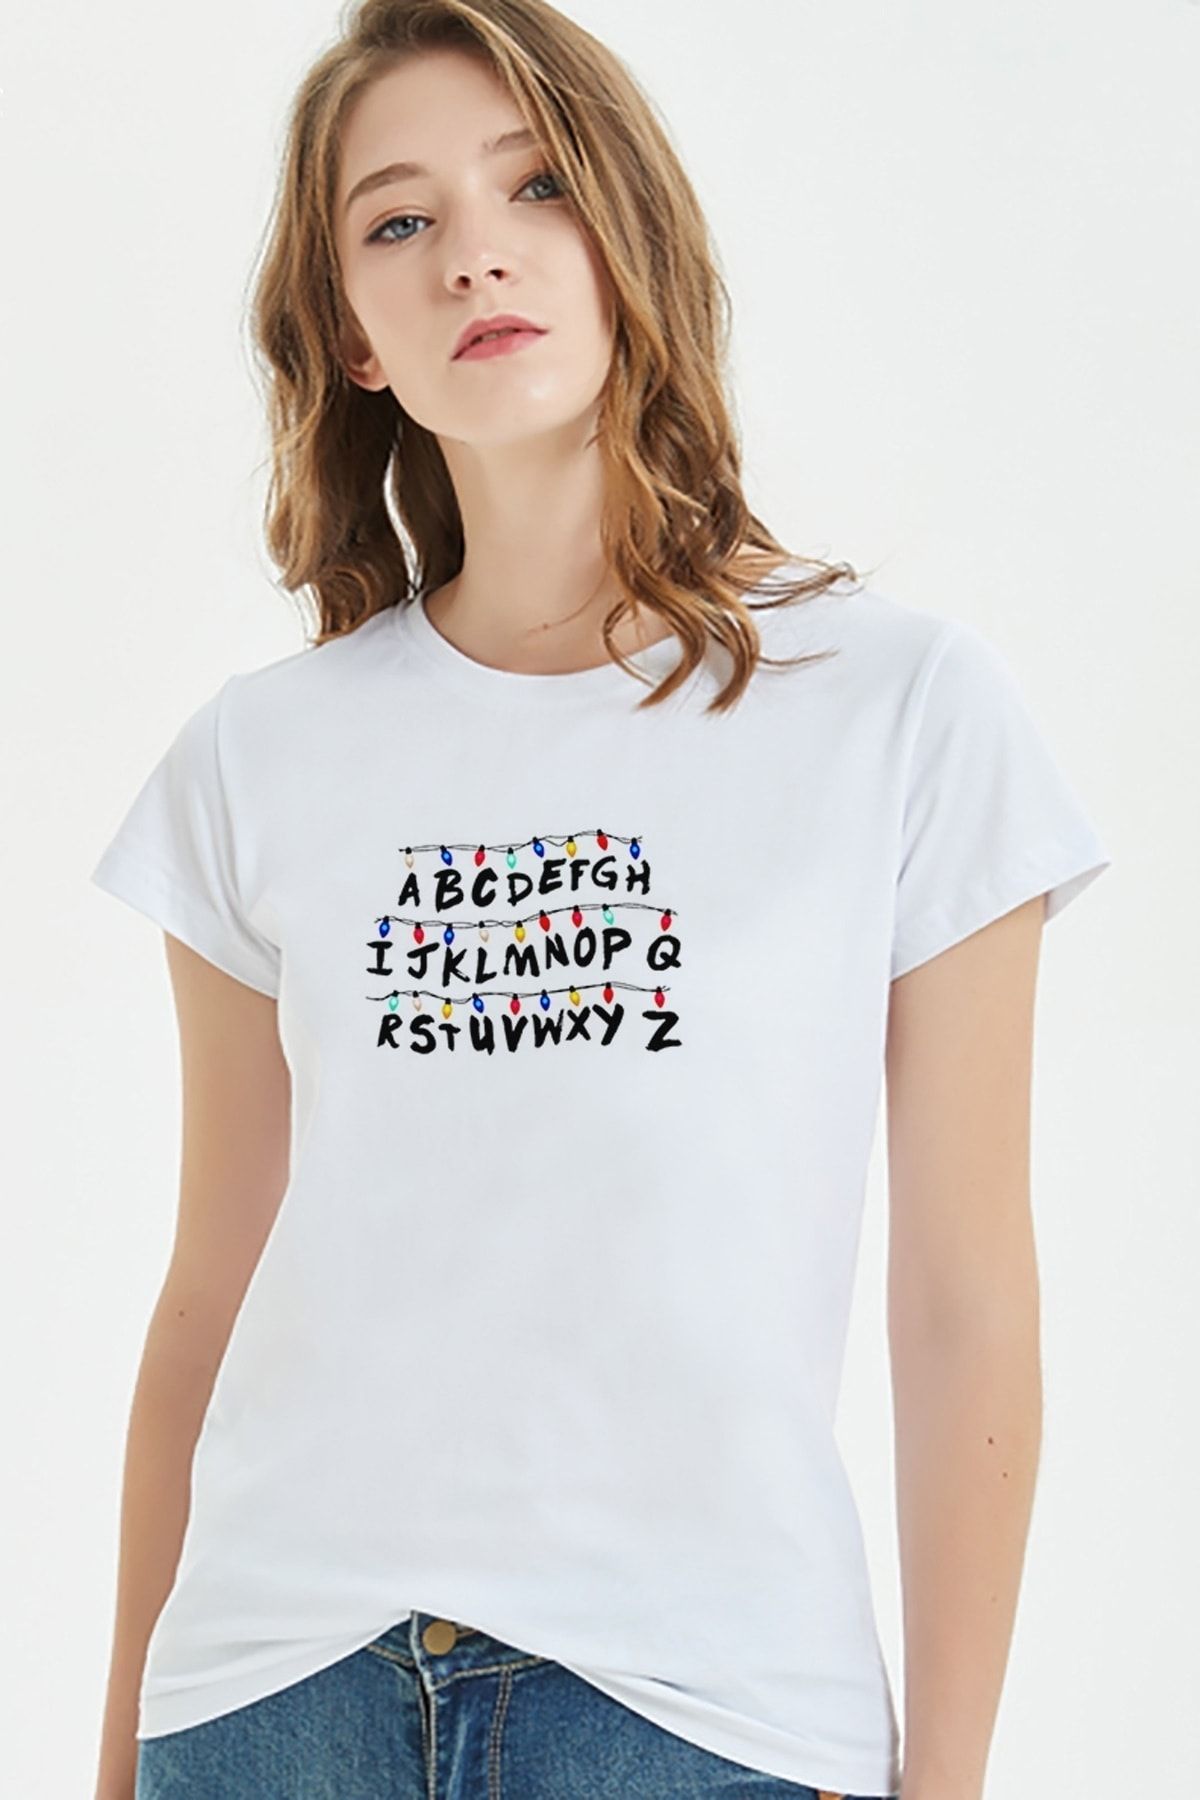 QIVI Stranger Things Estampa Alfabeto Fractalmw Baskılı Beyaz Kadın Örme Tshirt T-shirt Tişört T Shirt